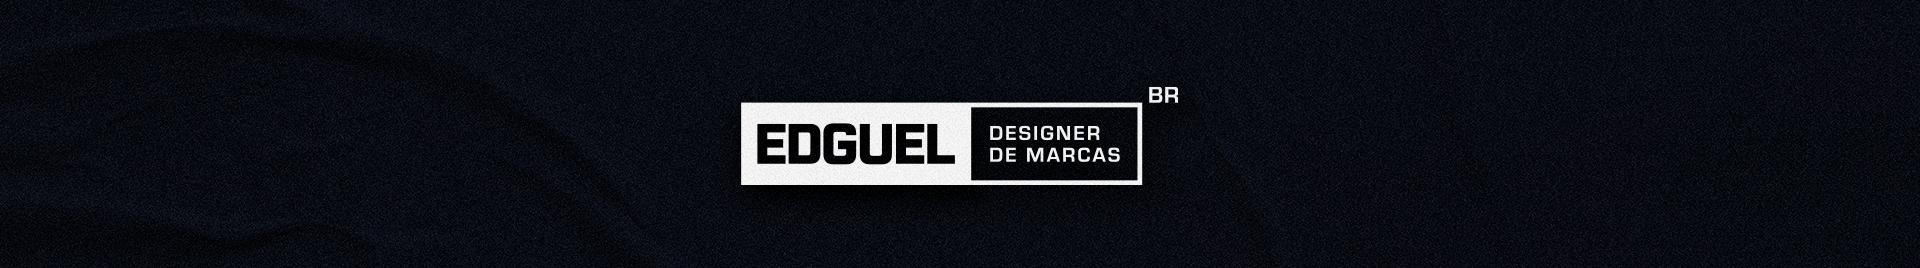 Edguel Lucas's profile banner